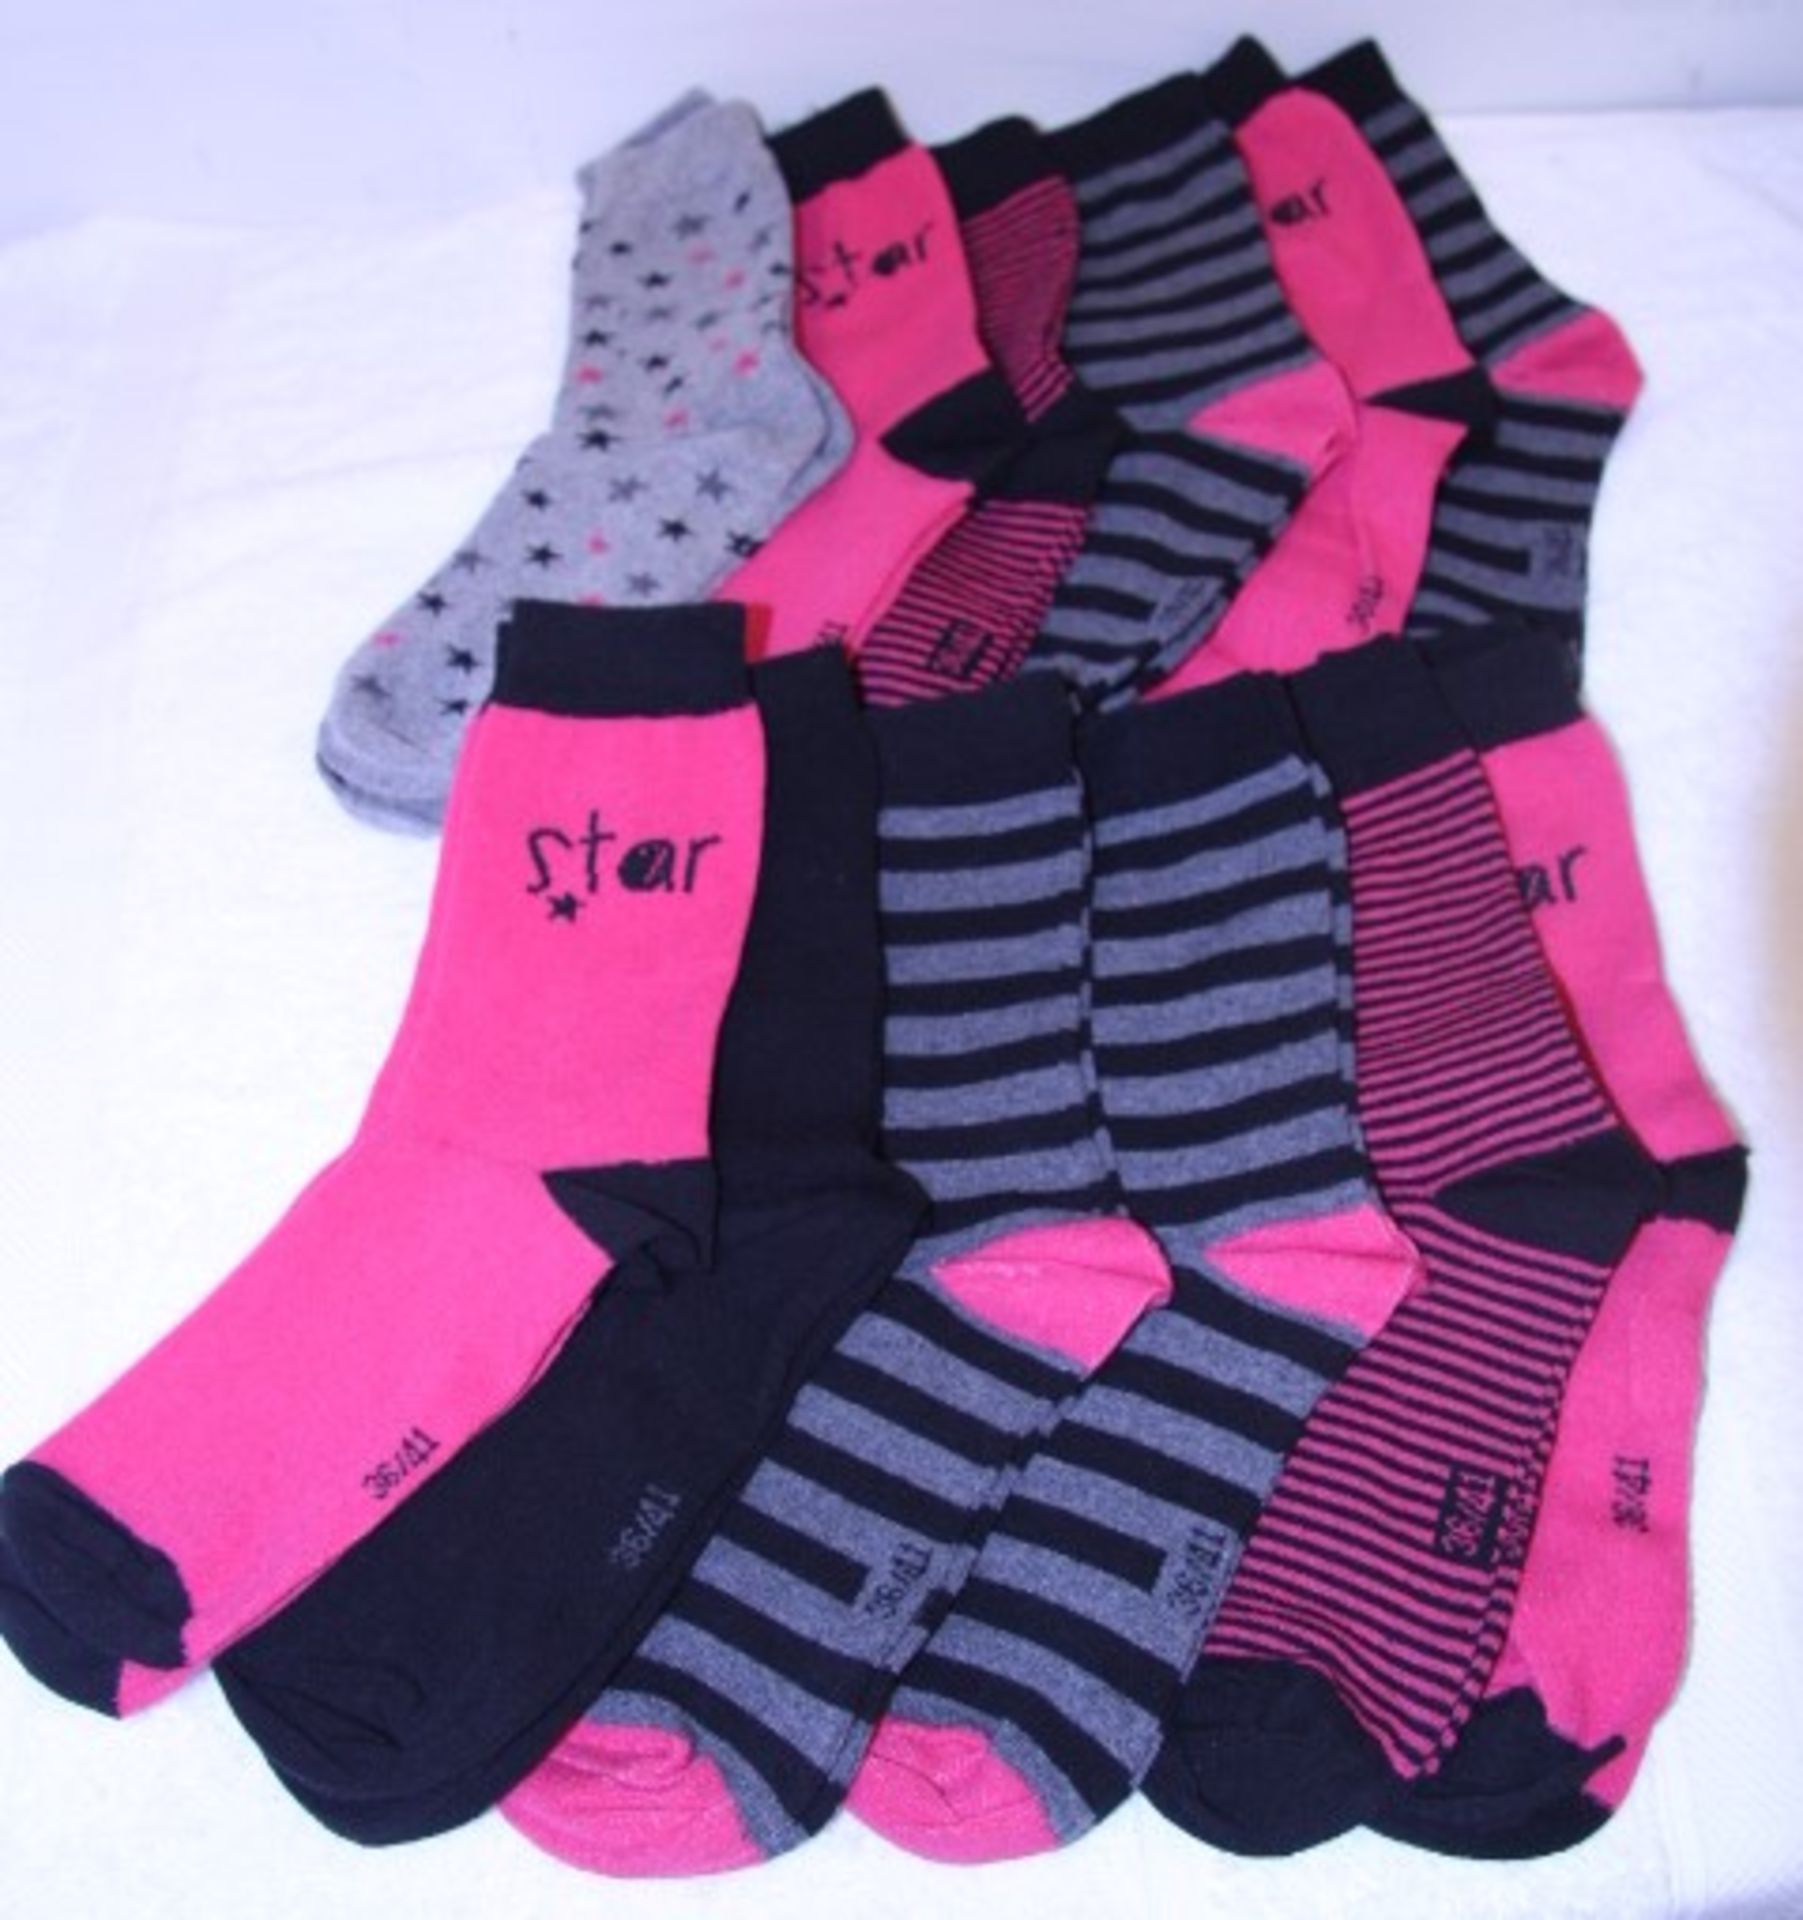 V Brand New A Lot of Twelve Pairs Ladies Fashion Socks (Designs May Vary) - ISP £16.00 (Ebay)